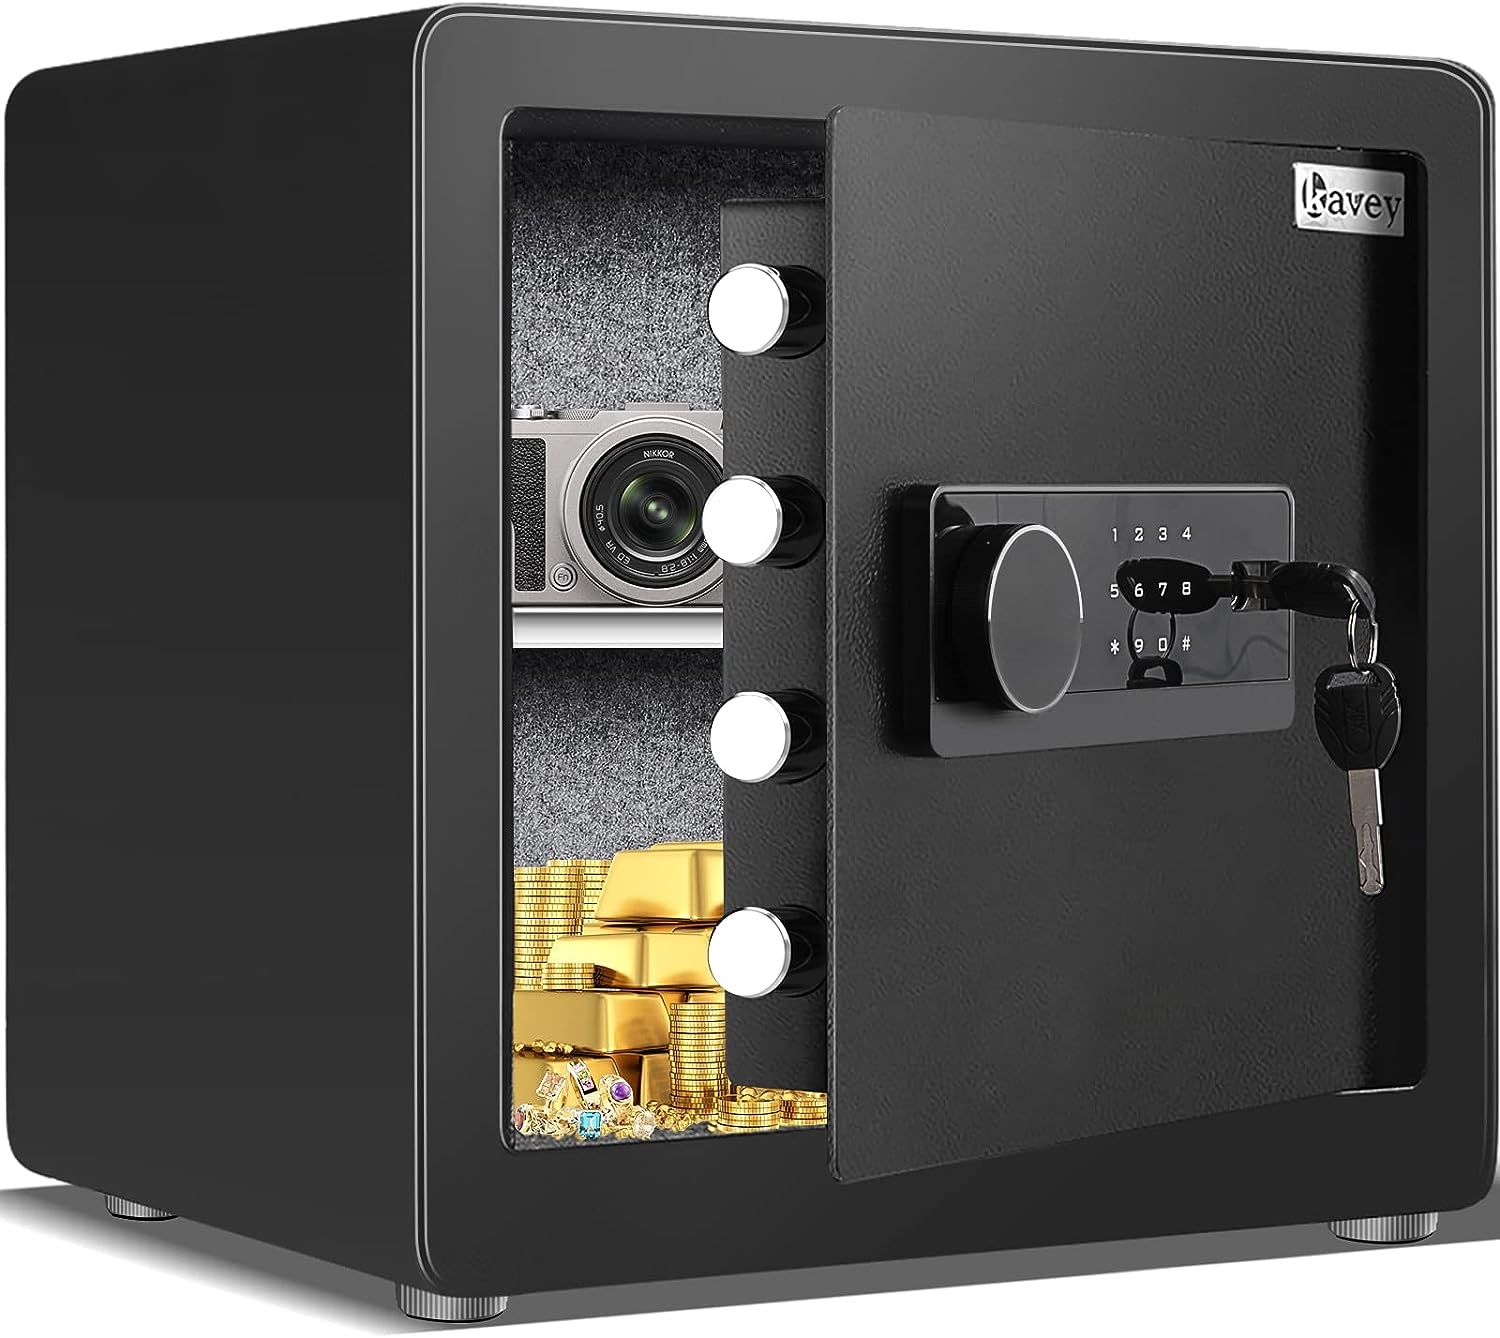 Kavey 1.6 Cub Safe Deposit Box | DeviceDaily.com